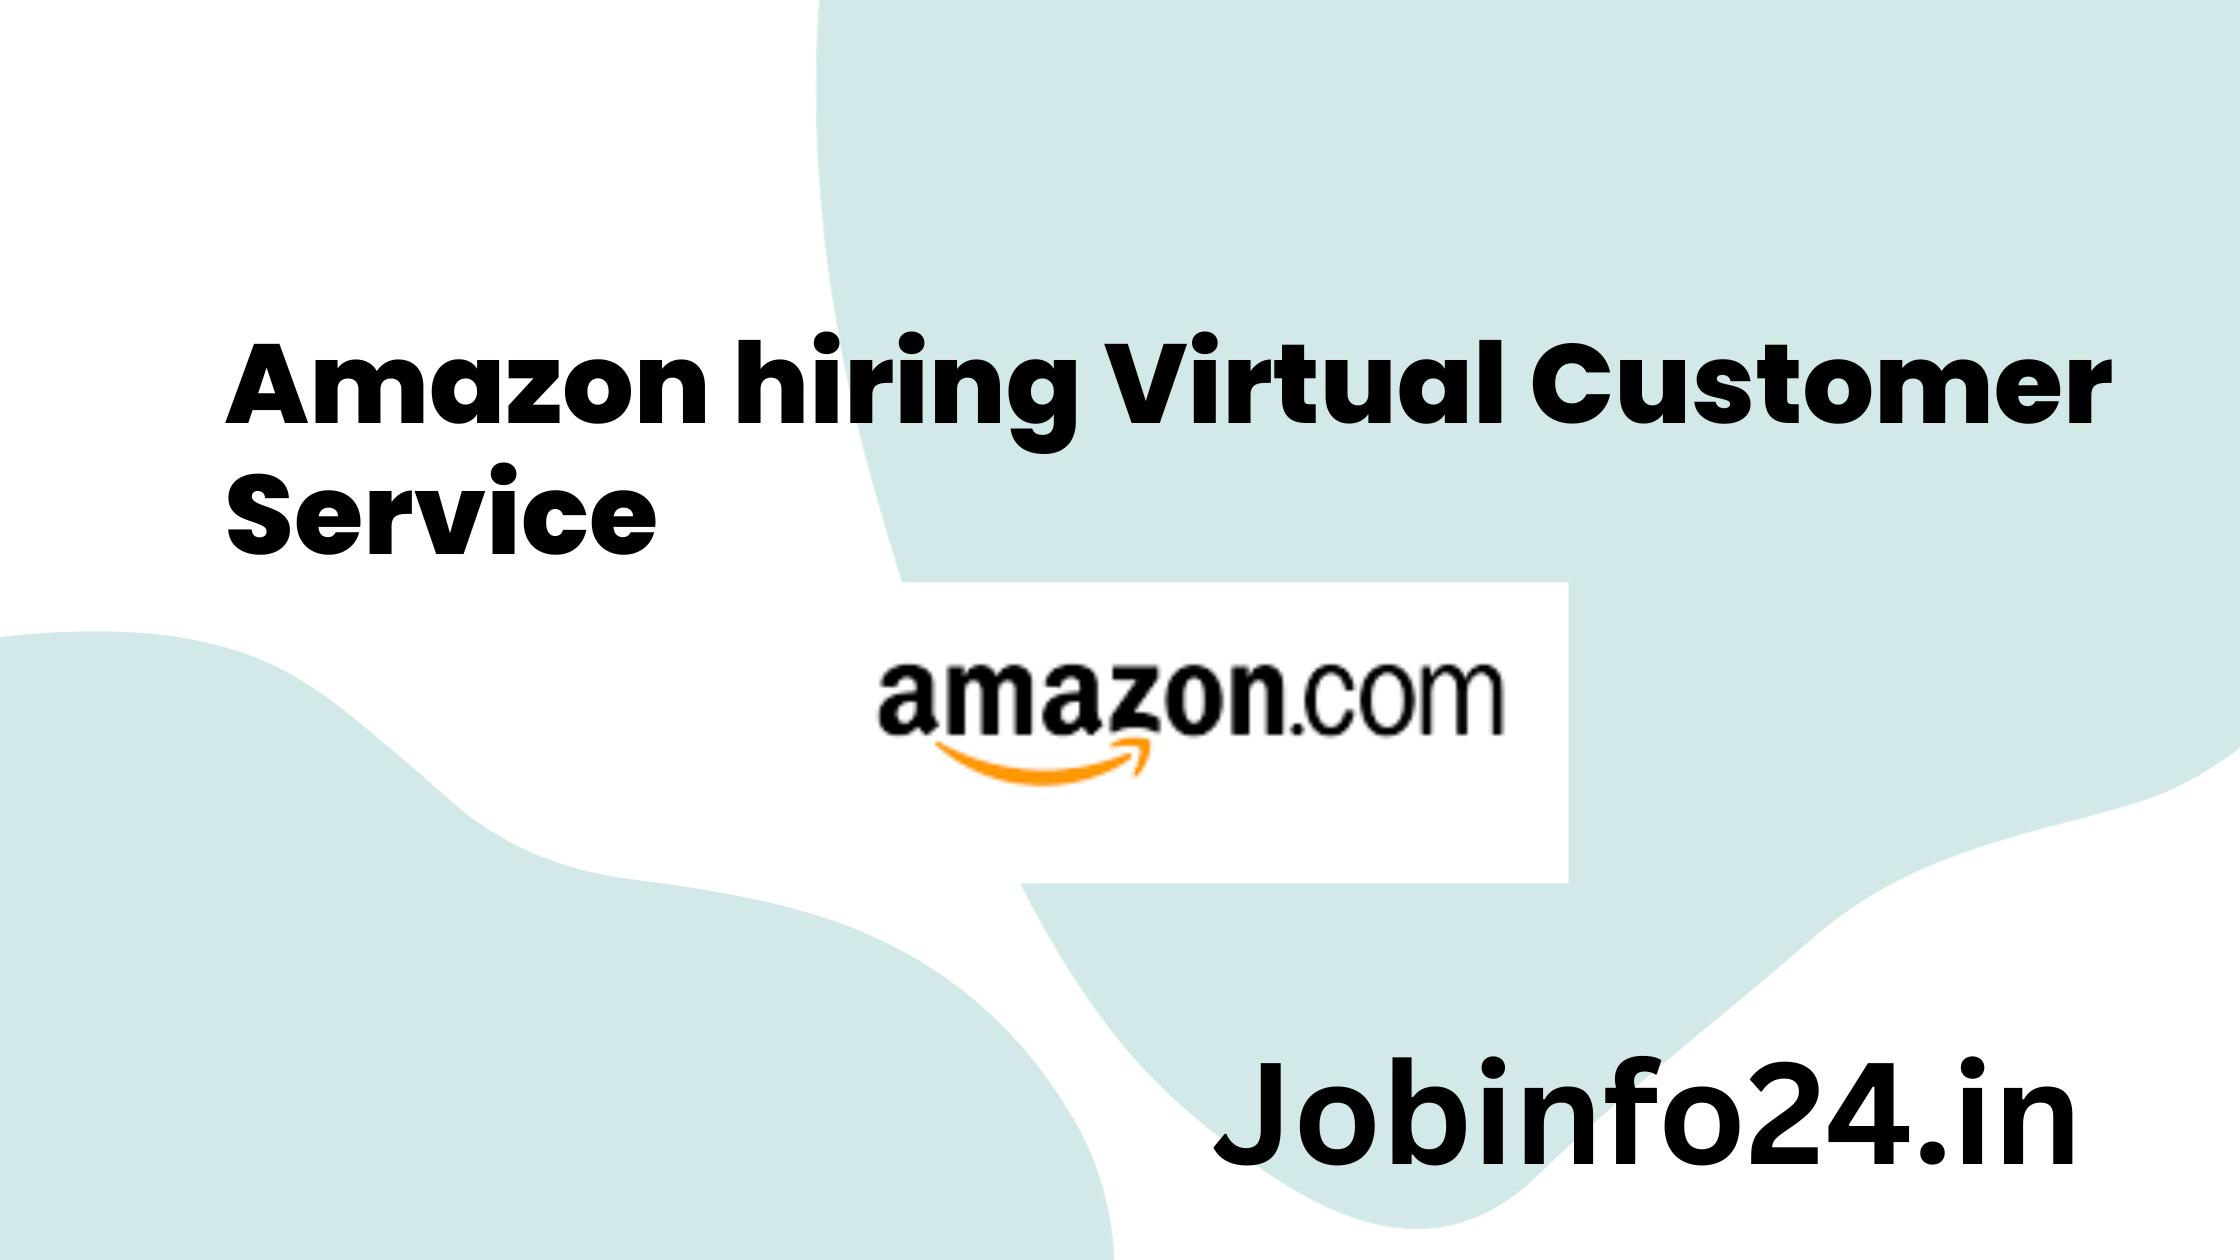 Amazon hiring Virtual Customer Service